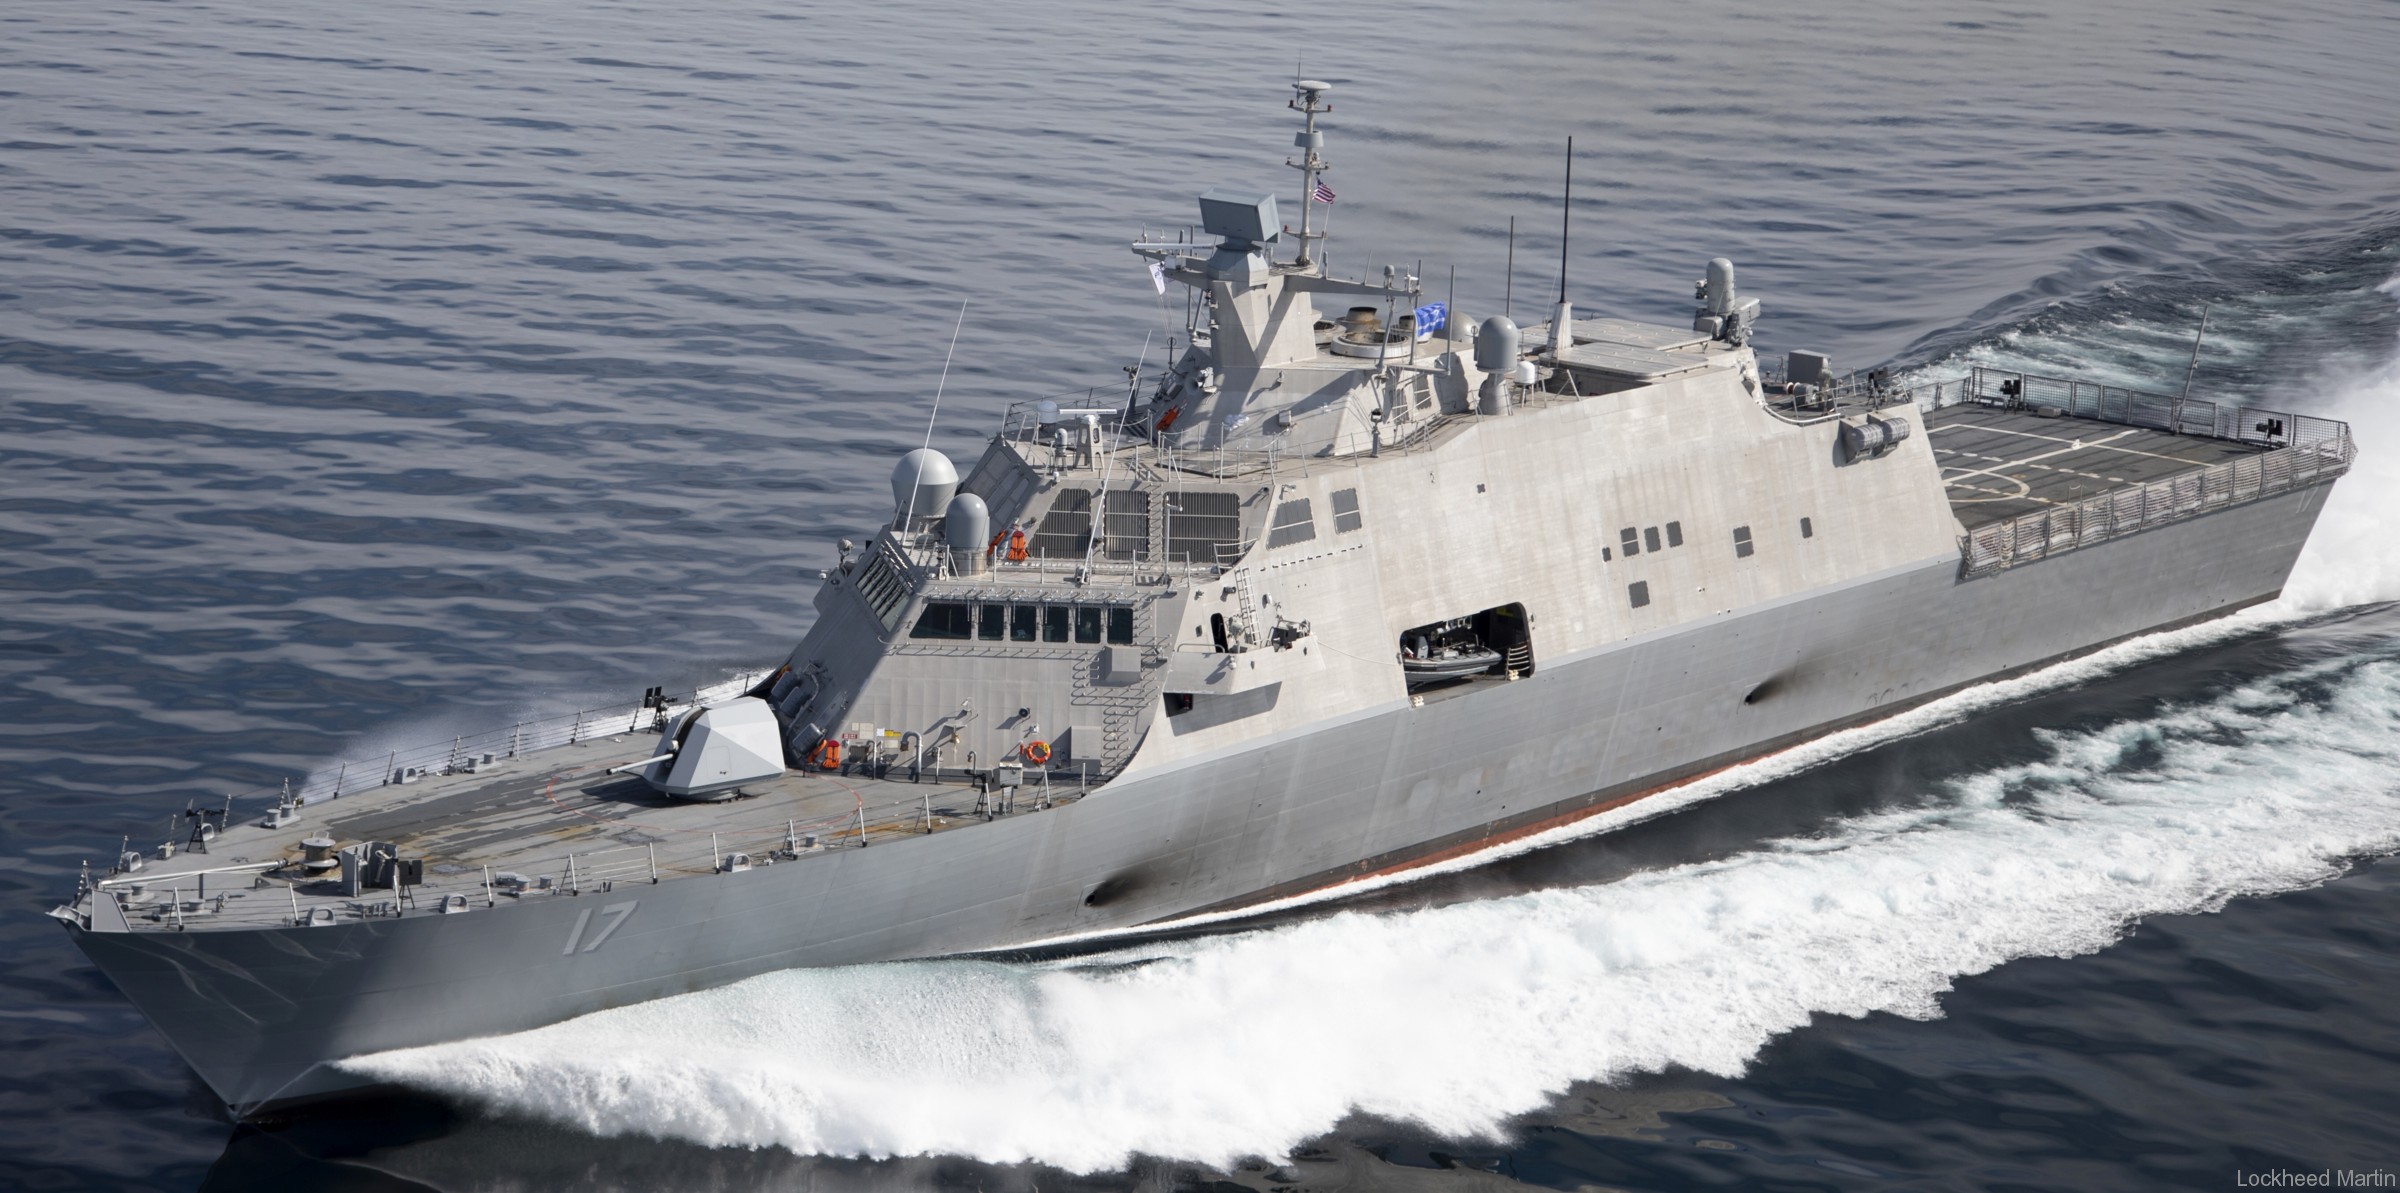 lcs-17 uss indianapolis freedom class littoral combat ship us navy 24 trials lake michigan fincantieri marinette